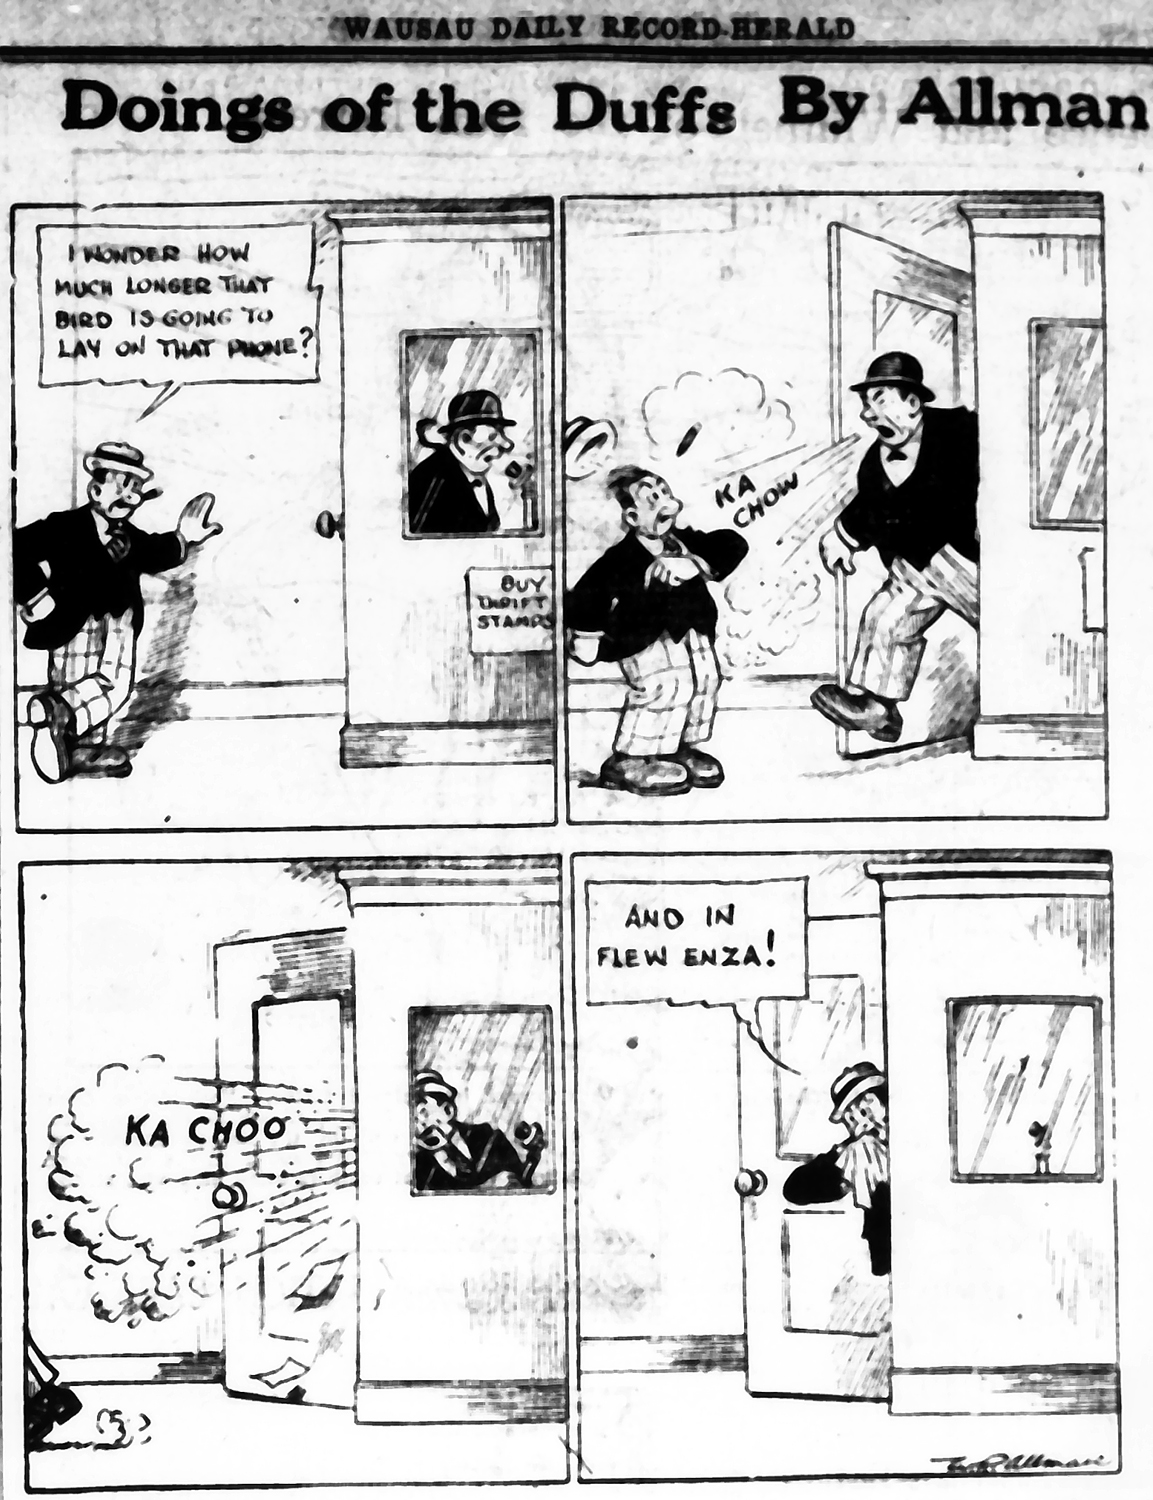 https://wiscontext.org/sites/default/files/assets/images/history-health-publichealth-influenza-pandemic-1918-allman-cartoon.jpg